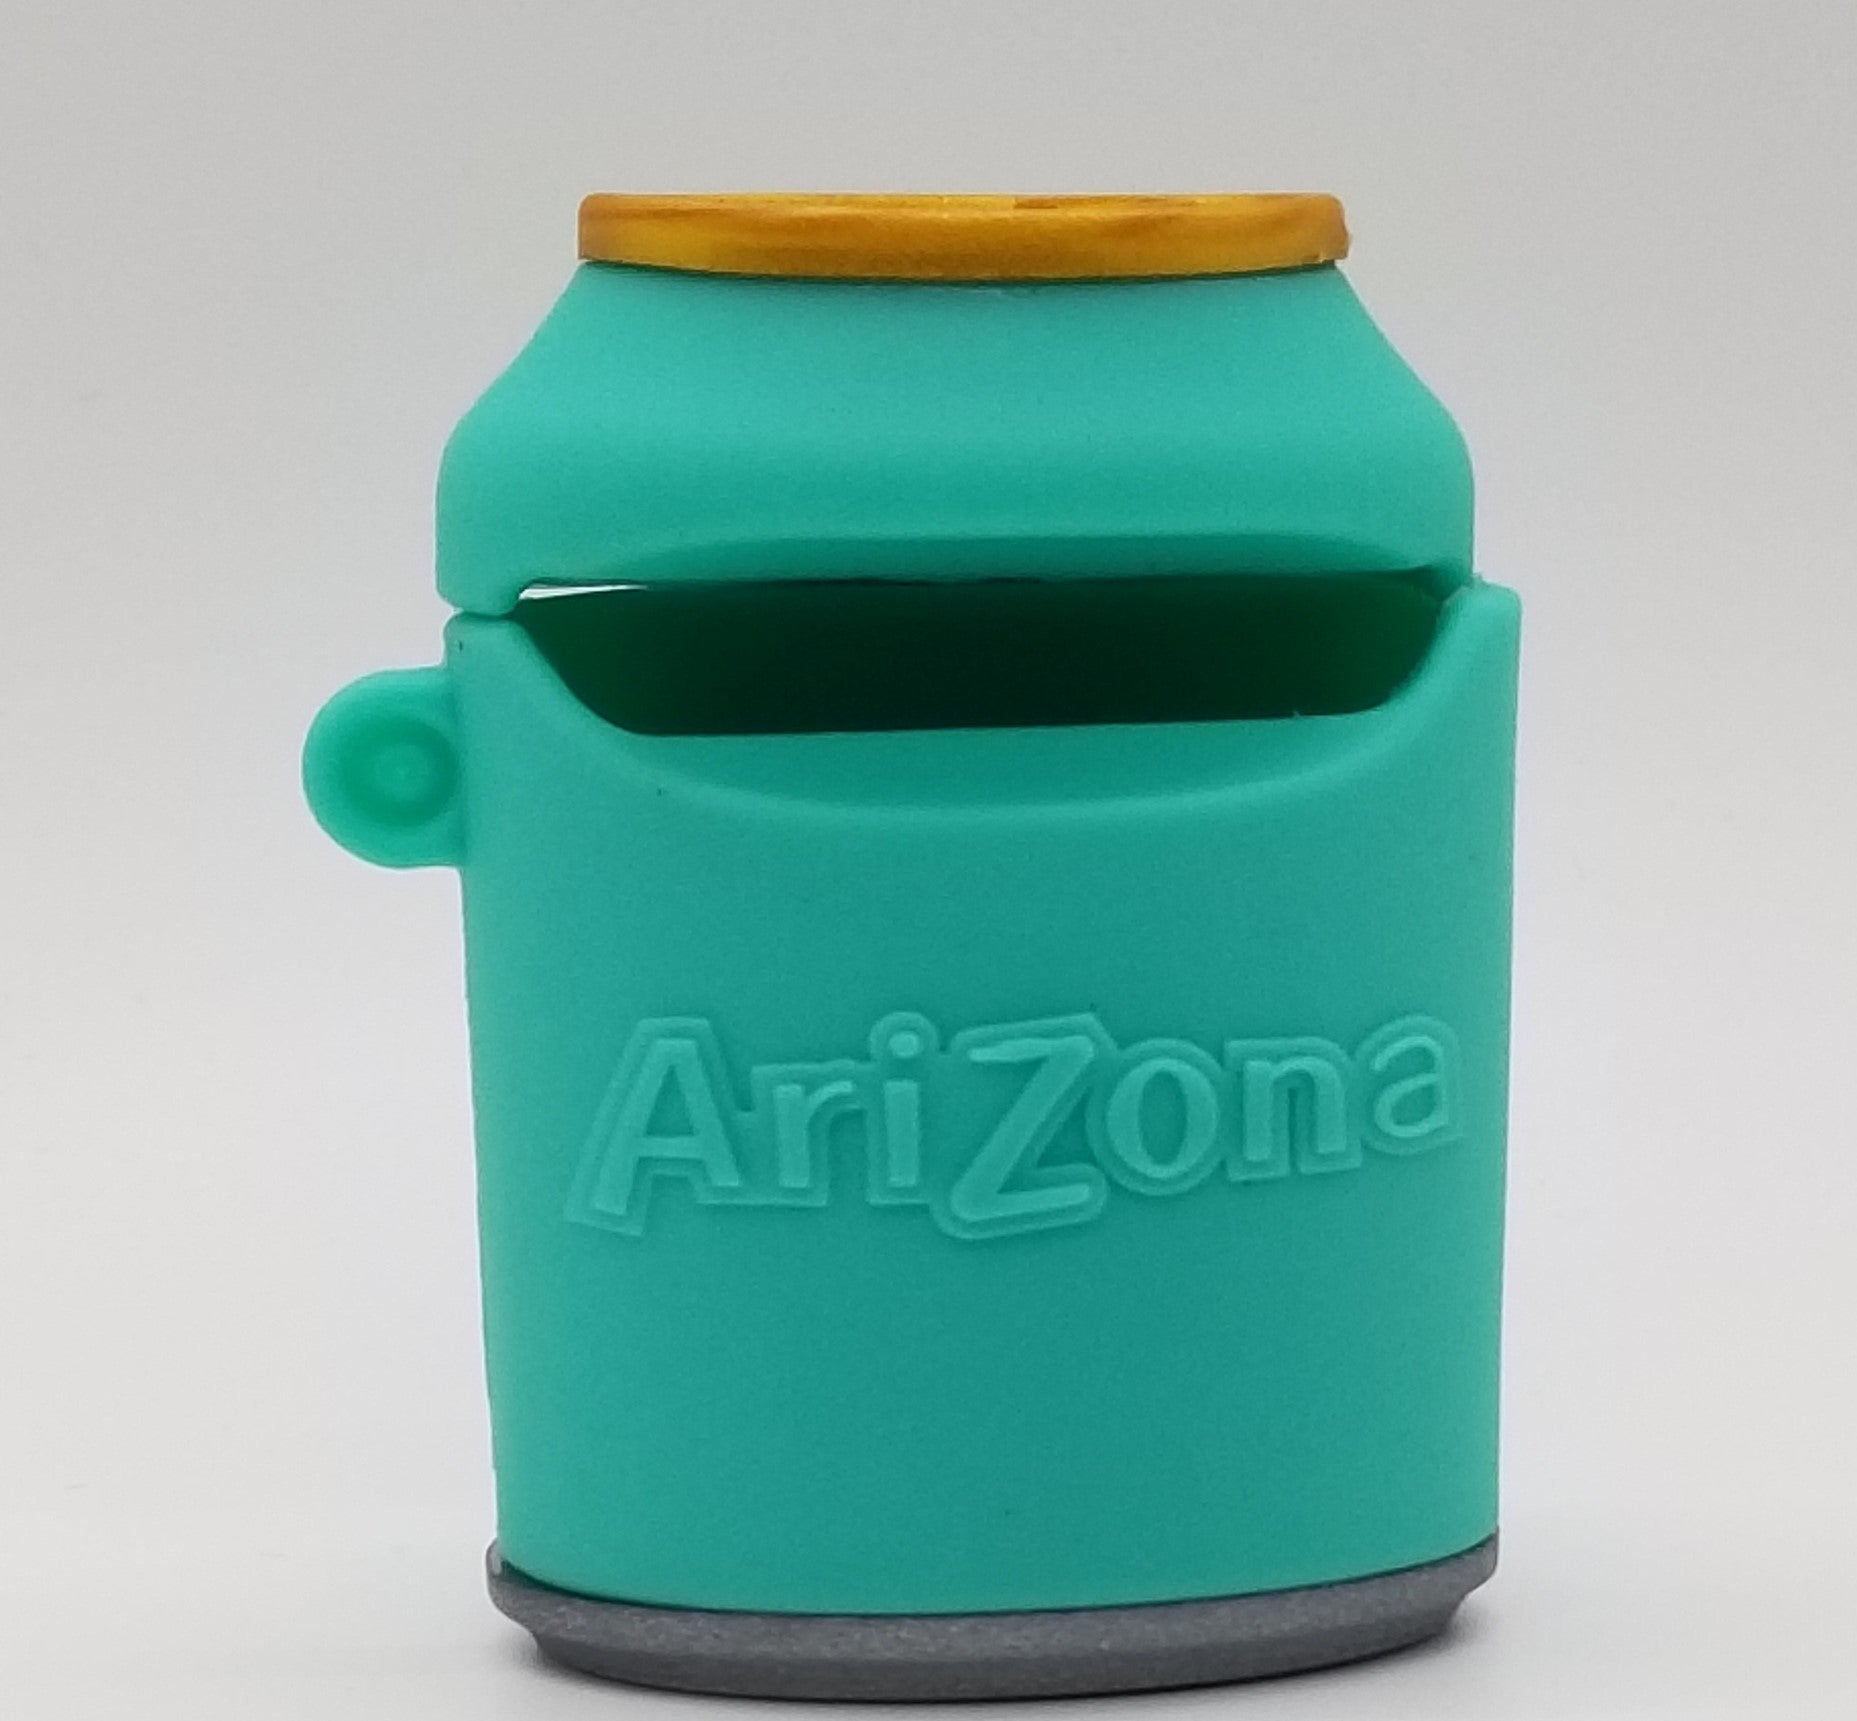 "Arizona Tea Themed" Airpods Case Cover